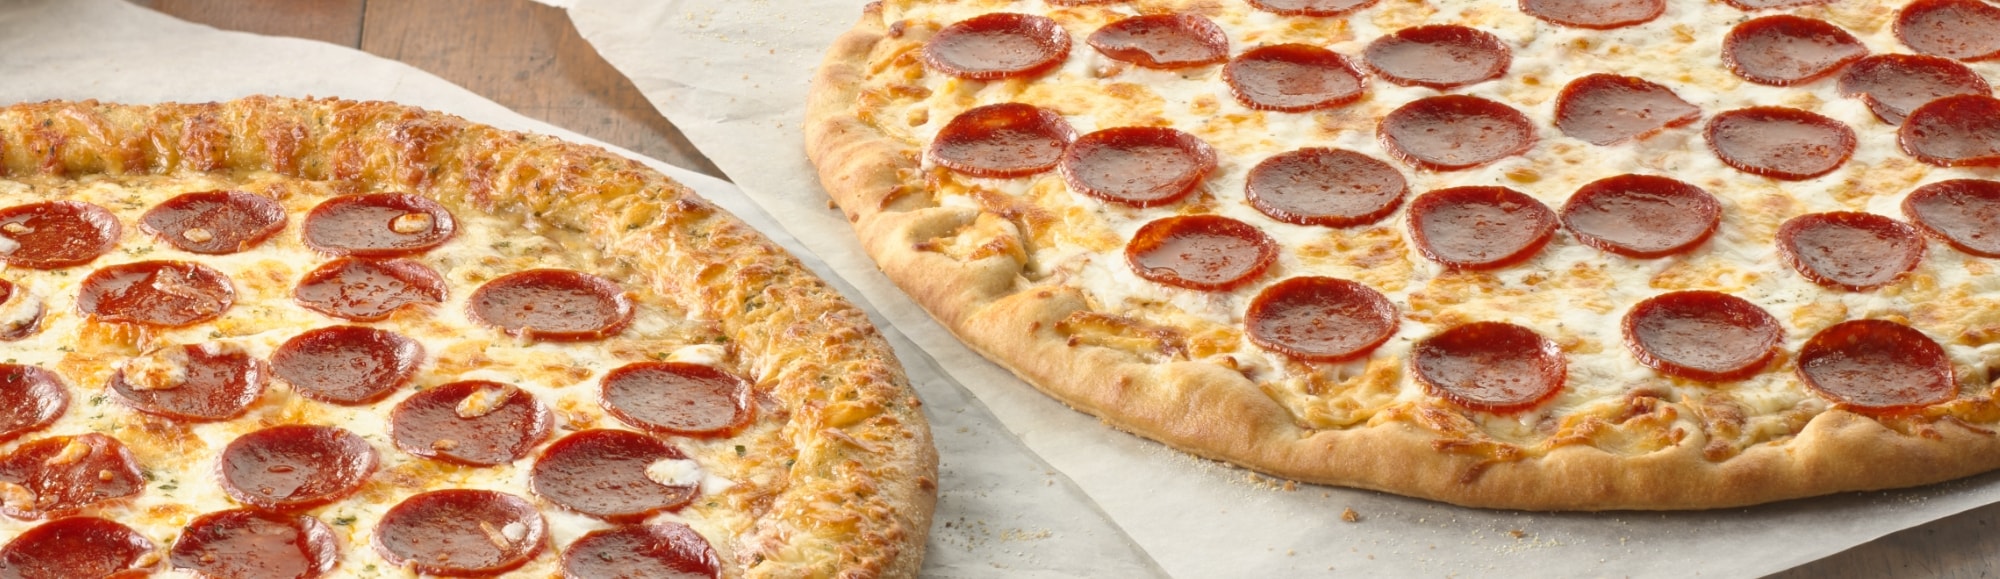 two pepperoni pizzas